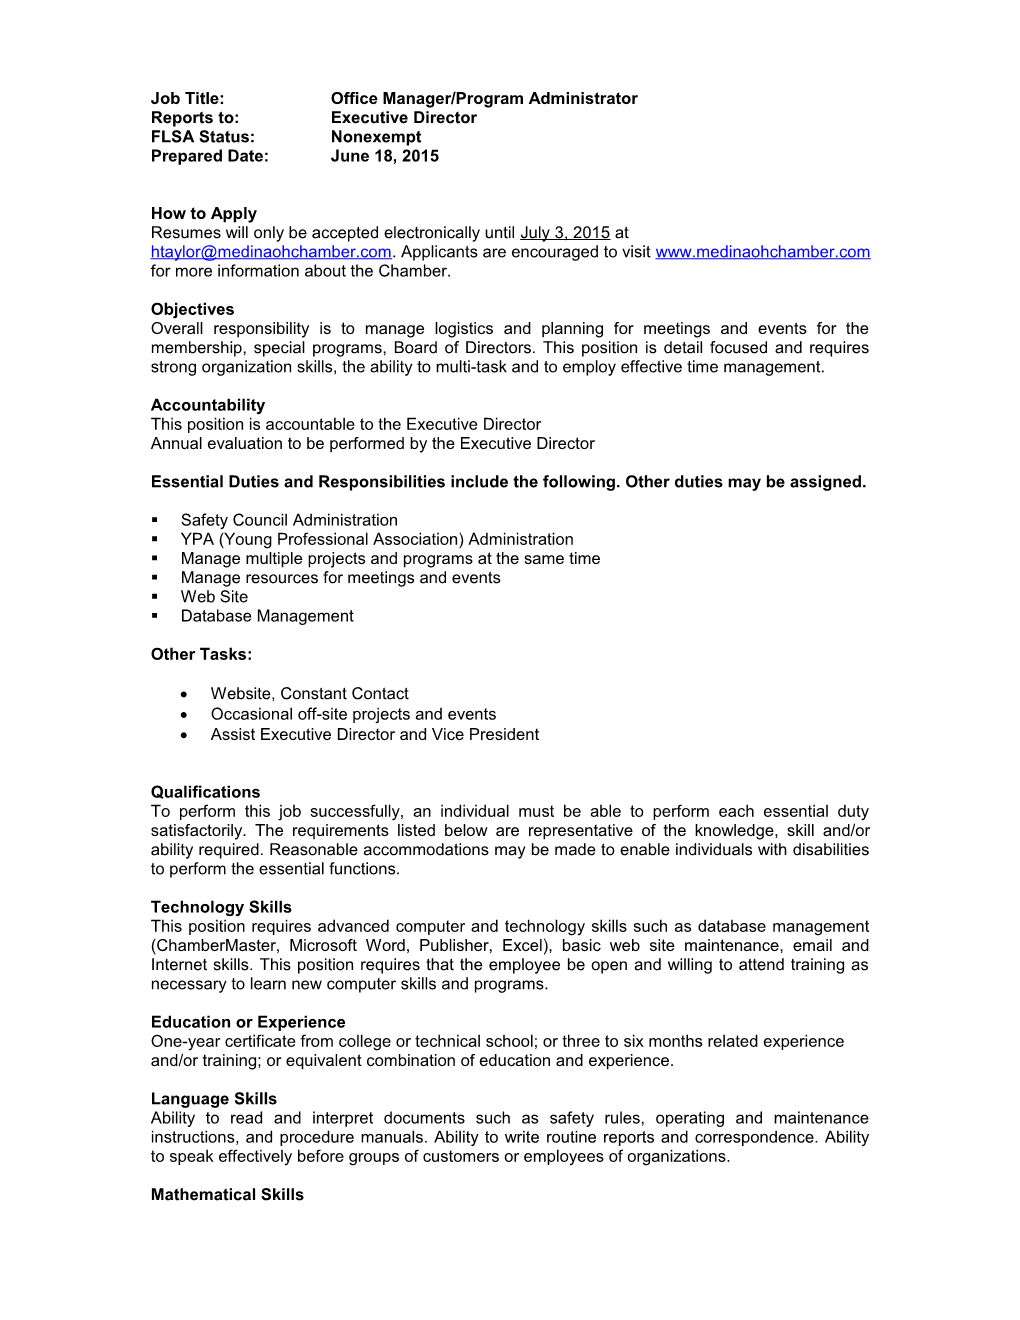 Job Description - Administrative Assistant/Project Manager